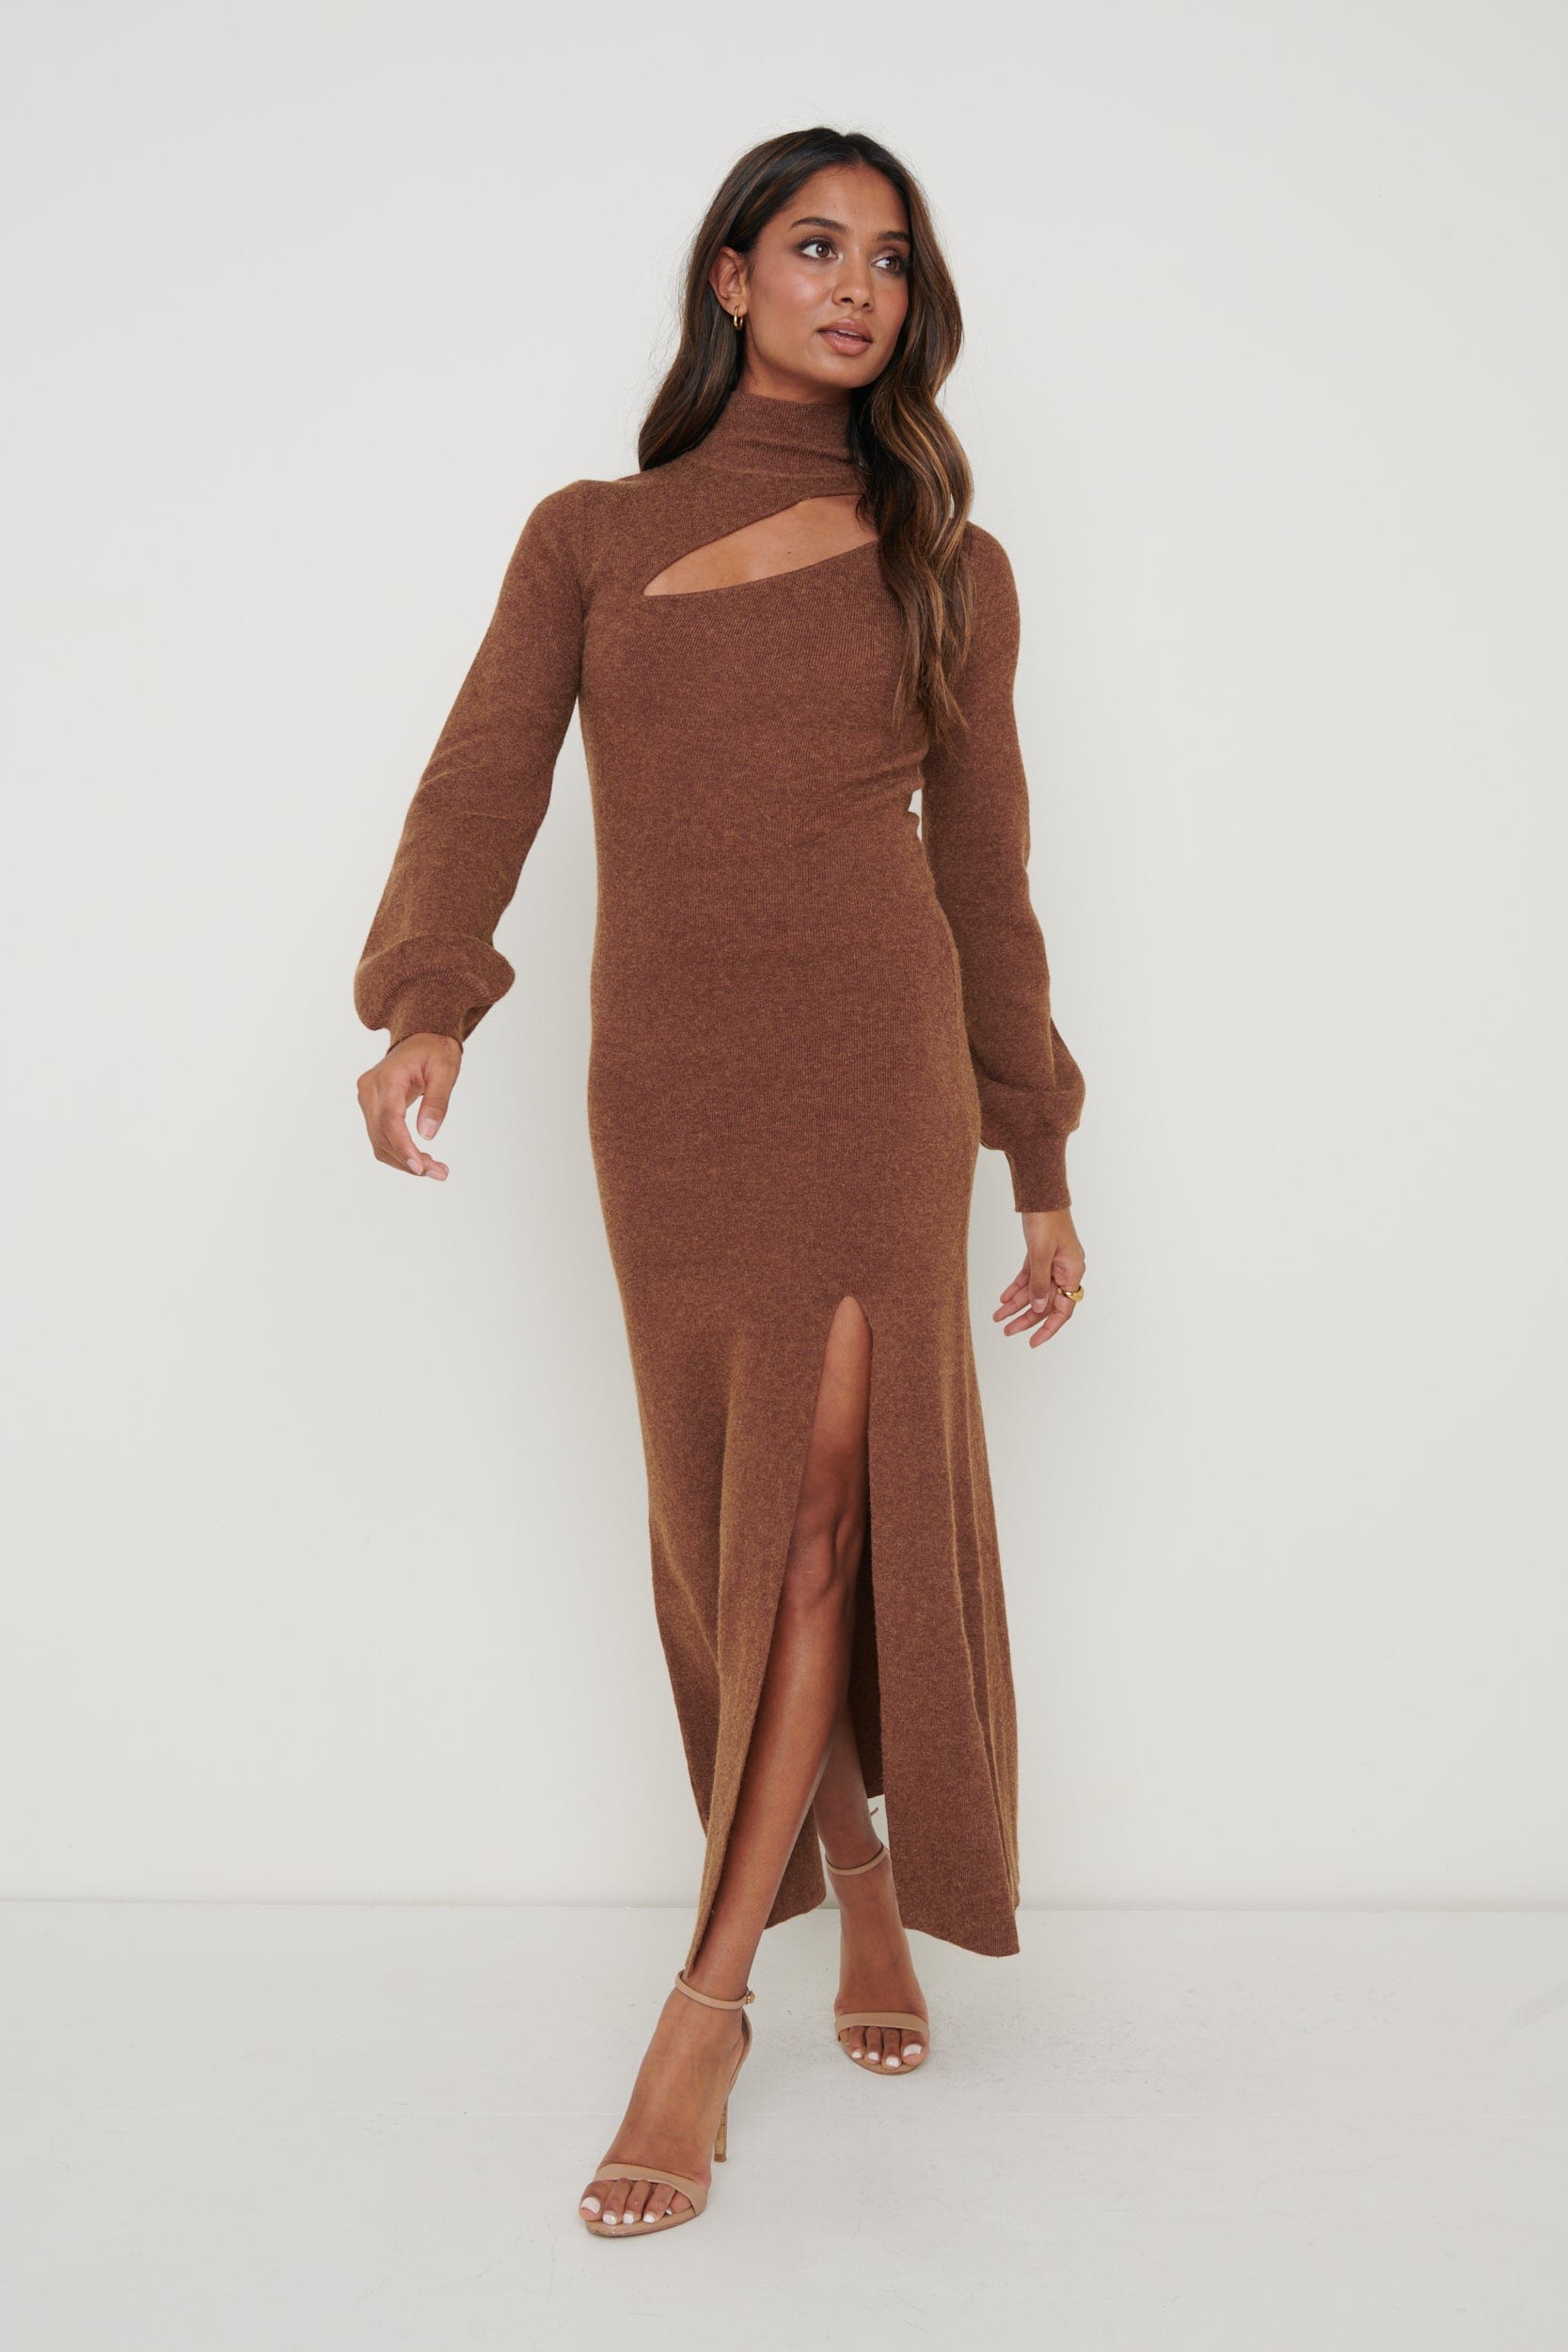 Jolie Cut Out Knit Dress - Chocolate Brown, L